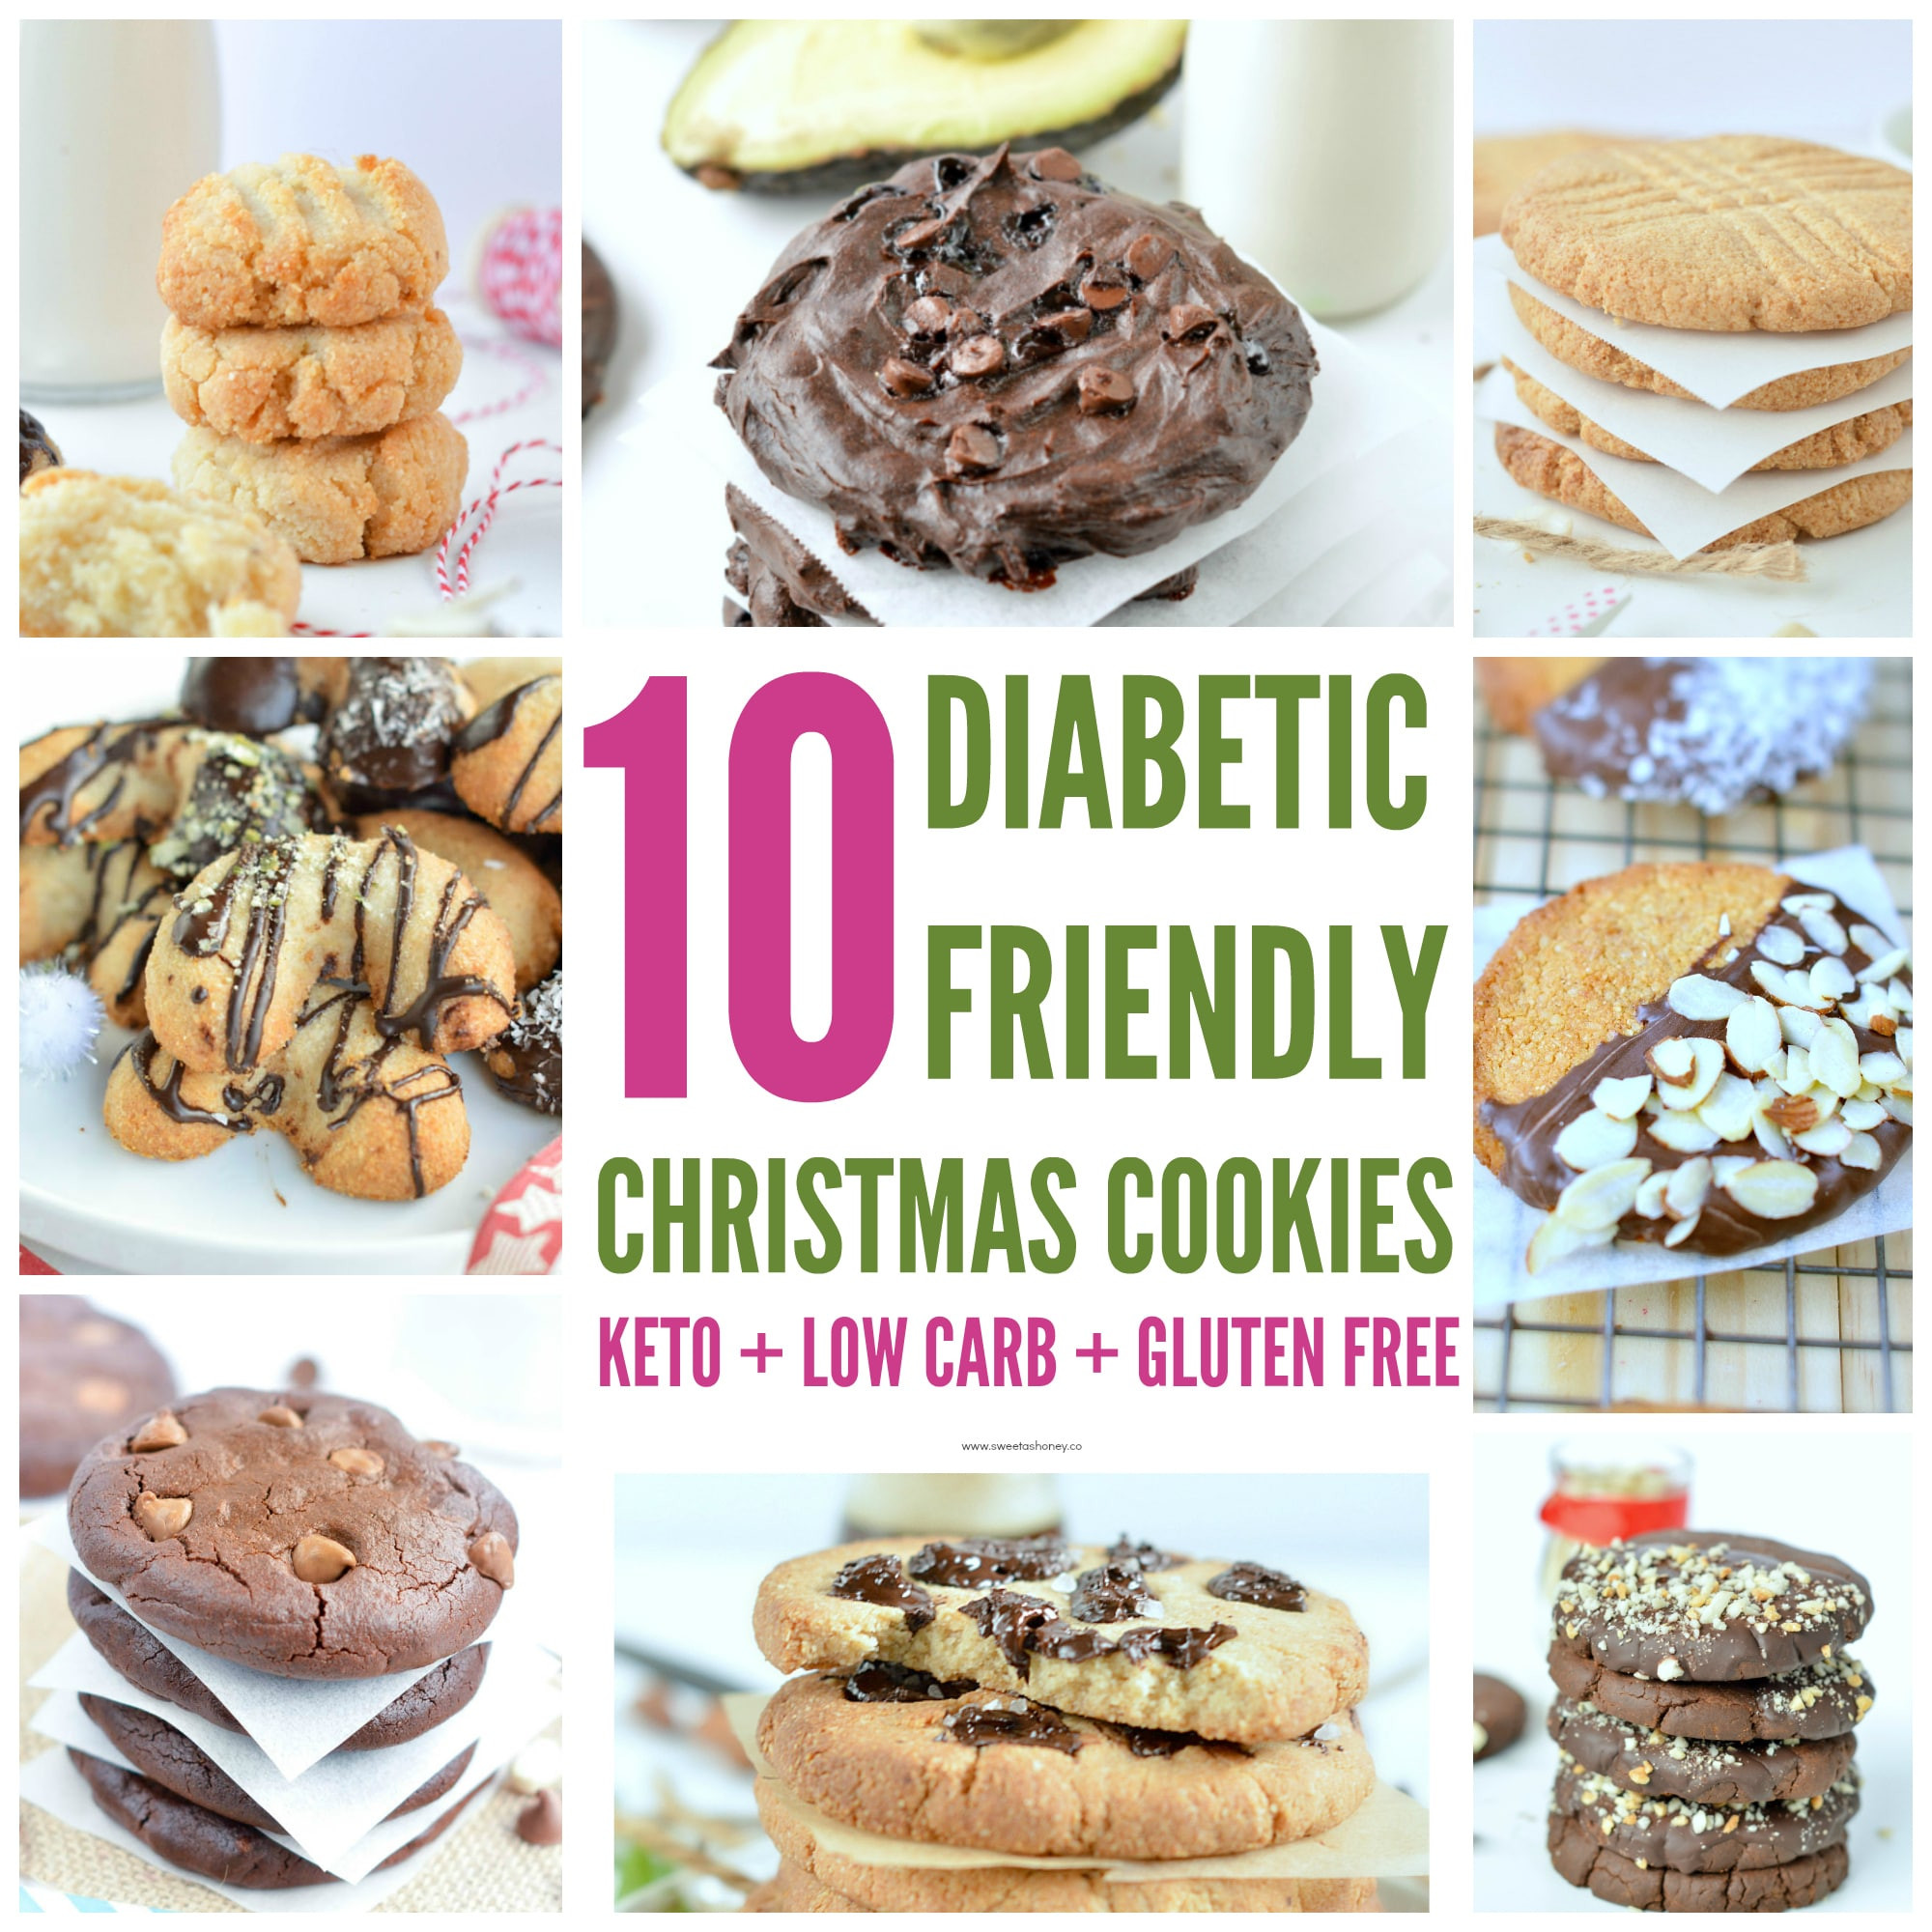 Diabetic Christmas Cookies Recipes
 Diabetic Christmas Cookies Keto gluten free Sweetashoney